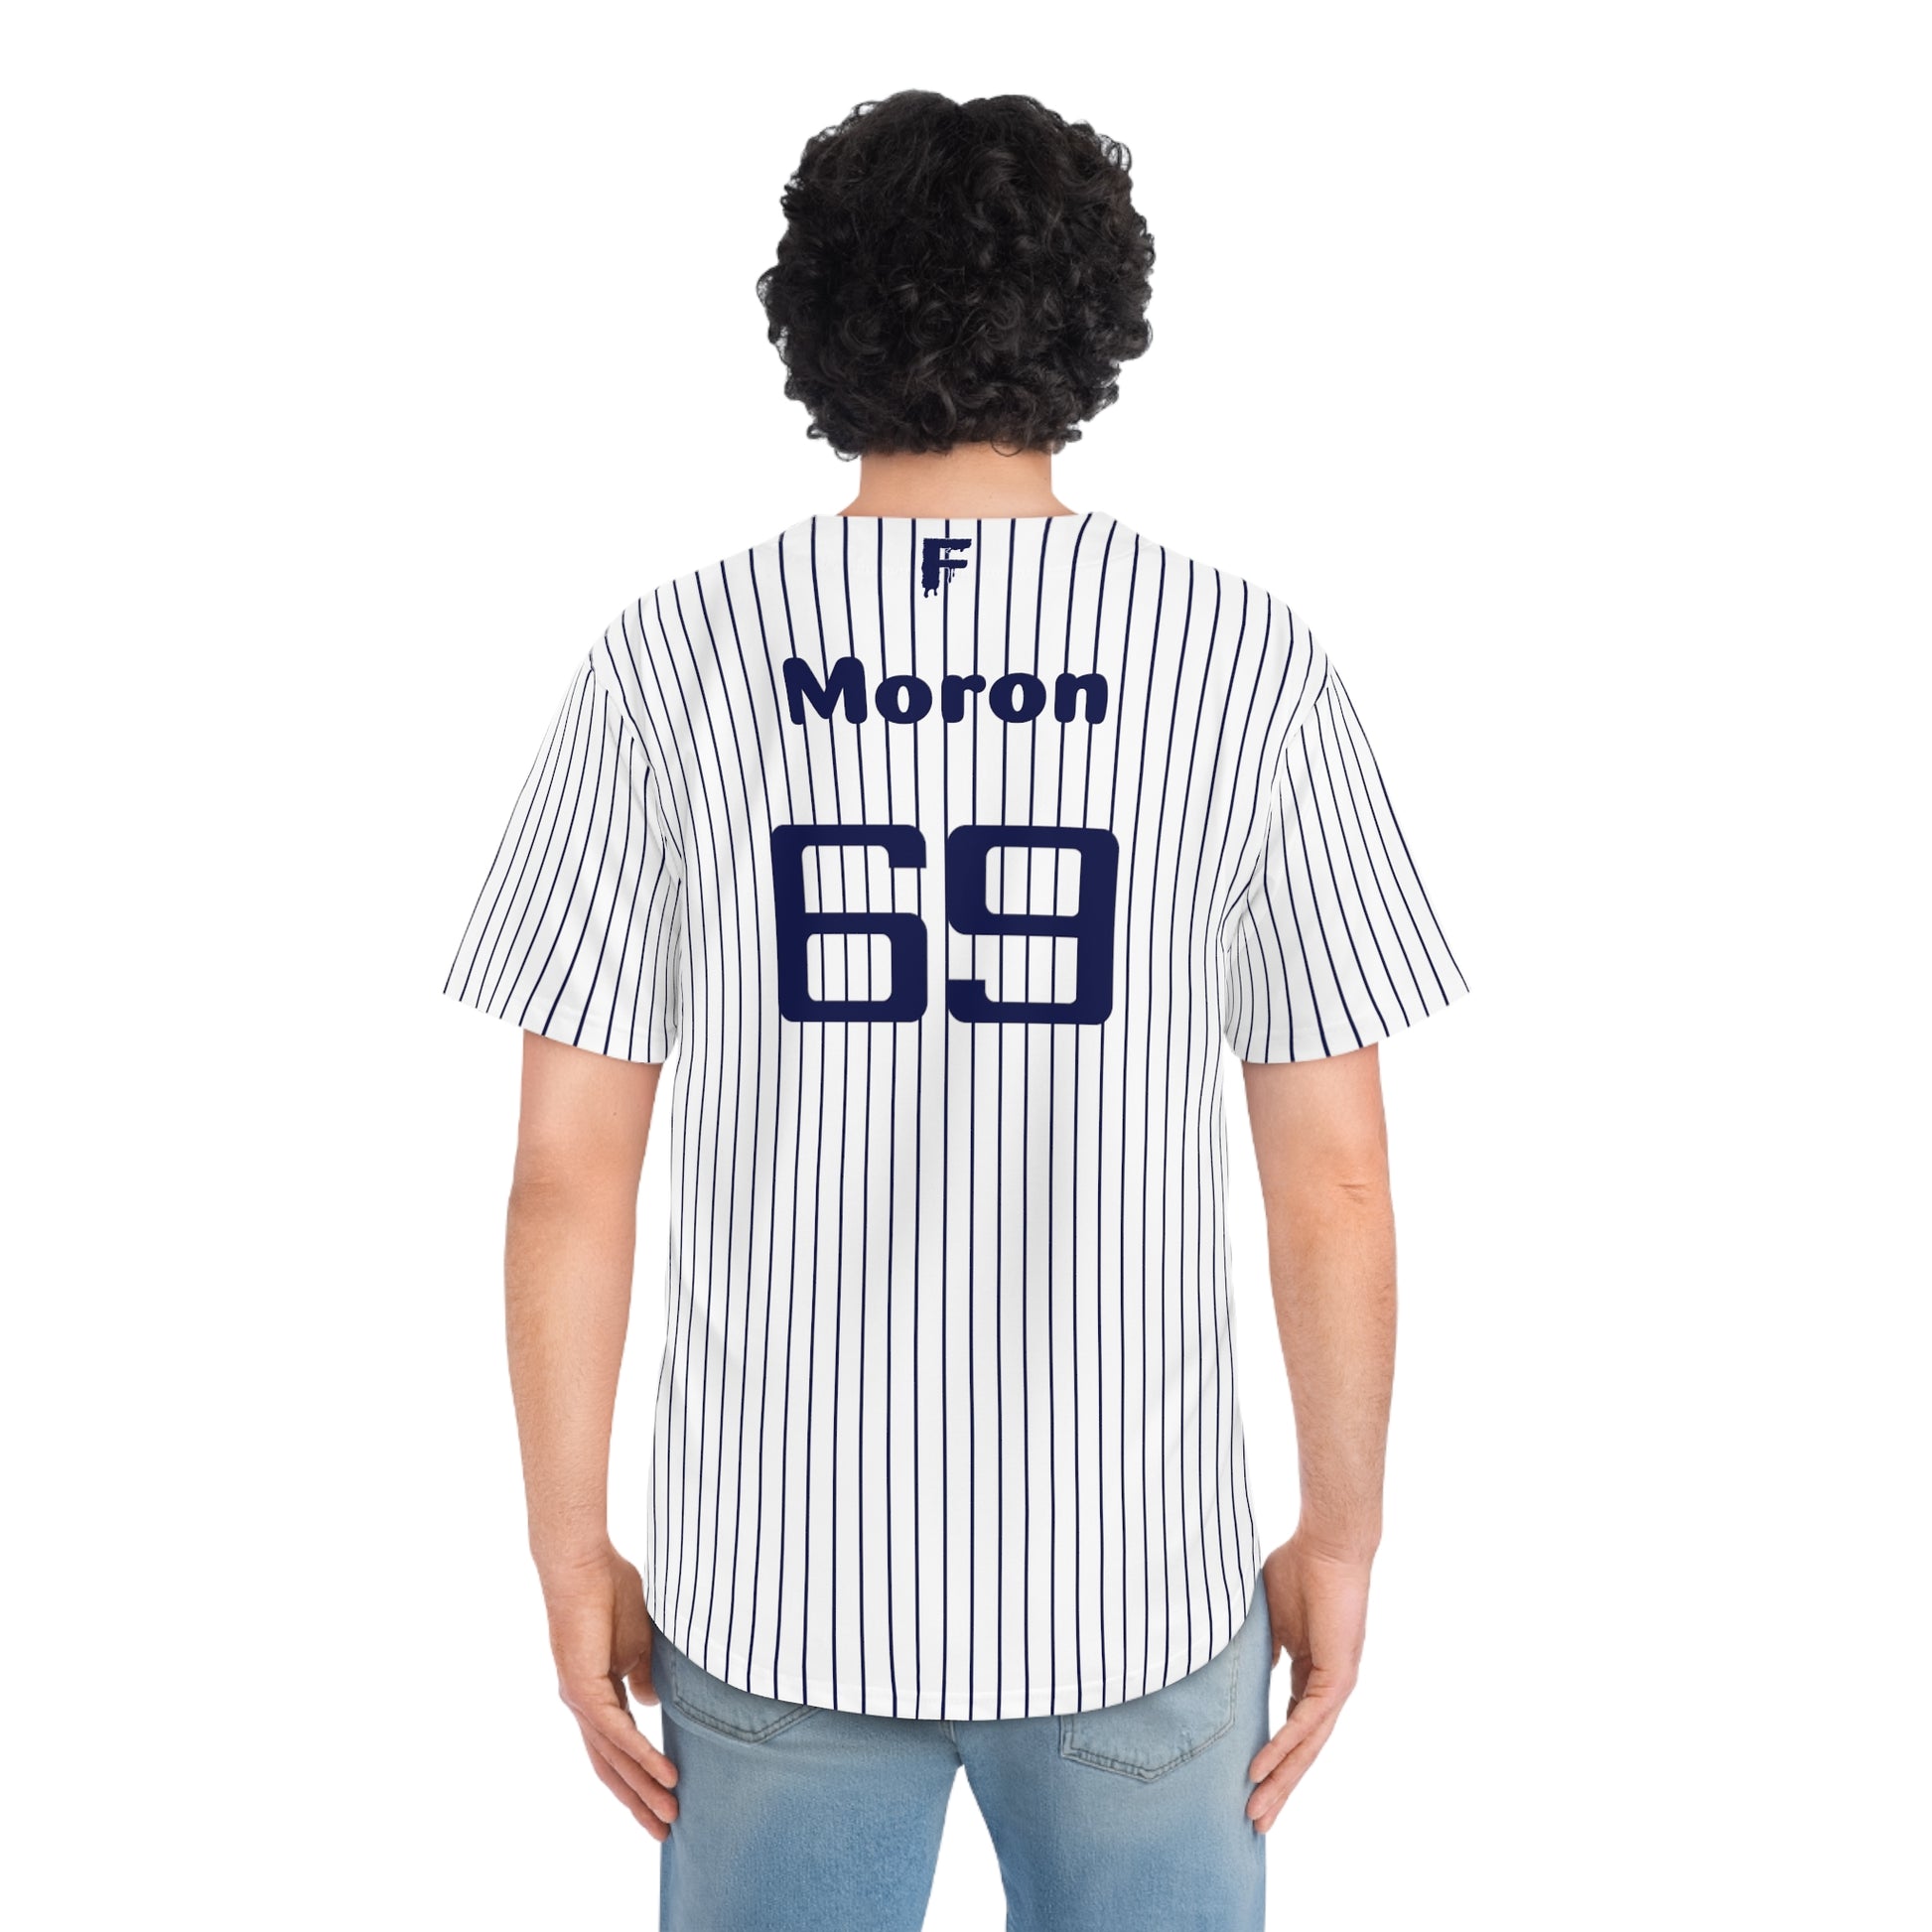 69ers Baseball Jersey (Yankees Parody) – FOUL Pranks